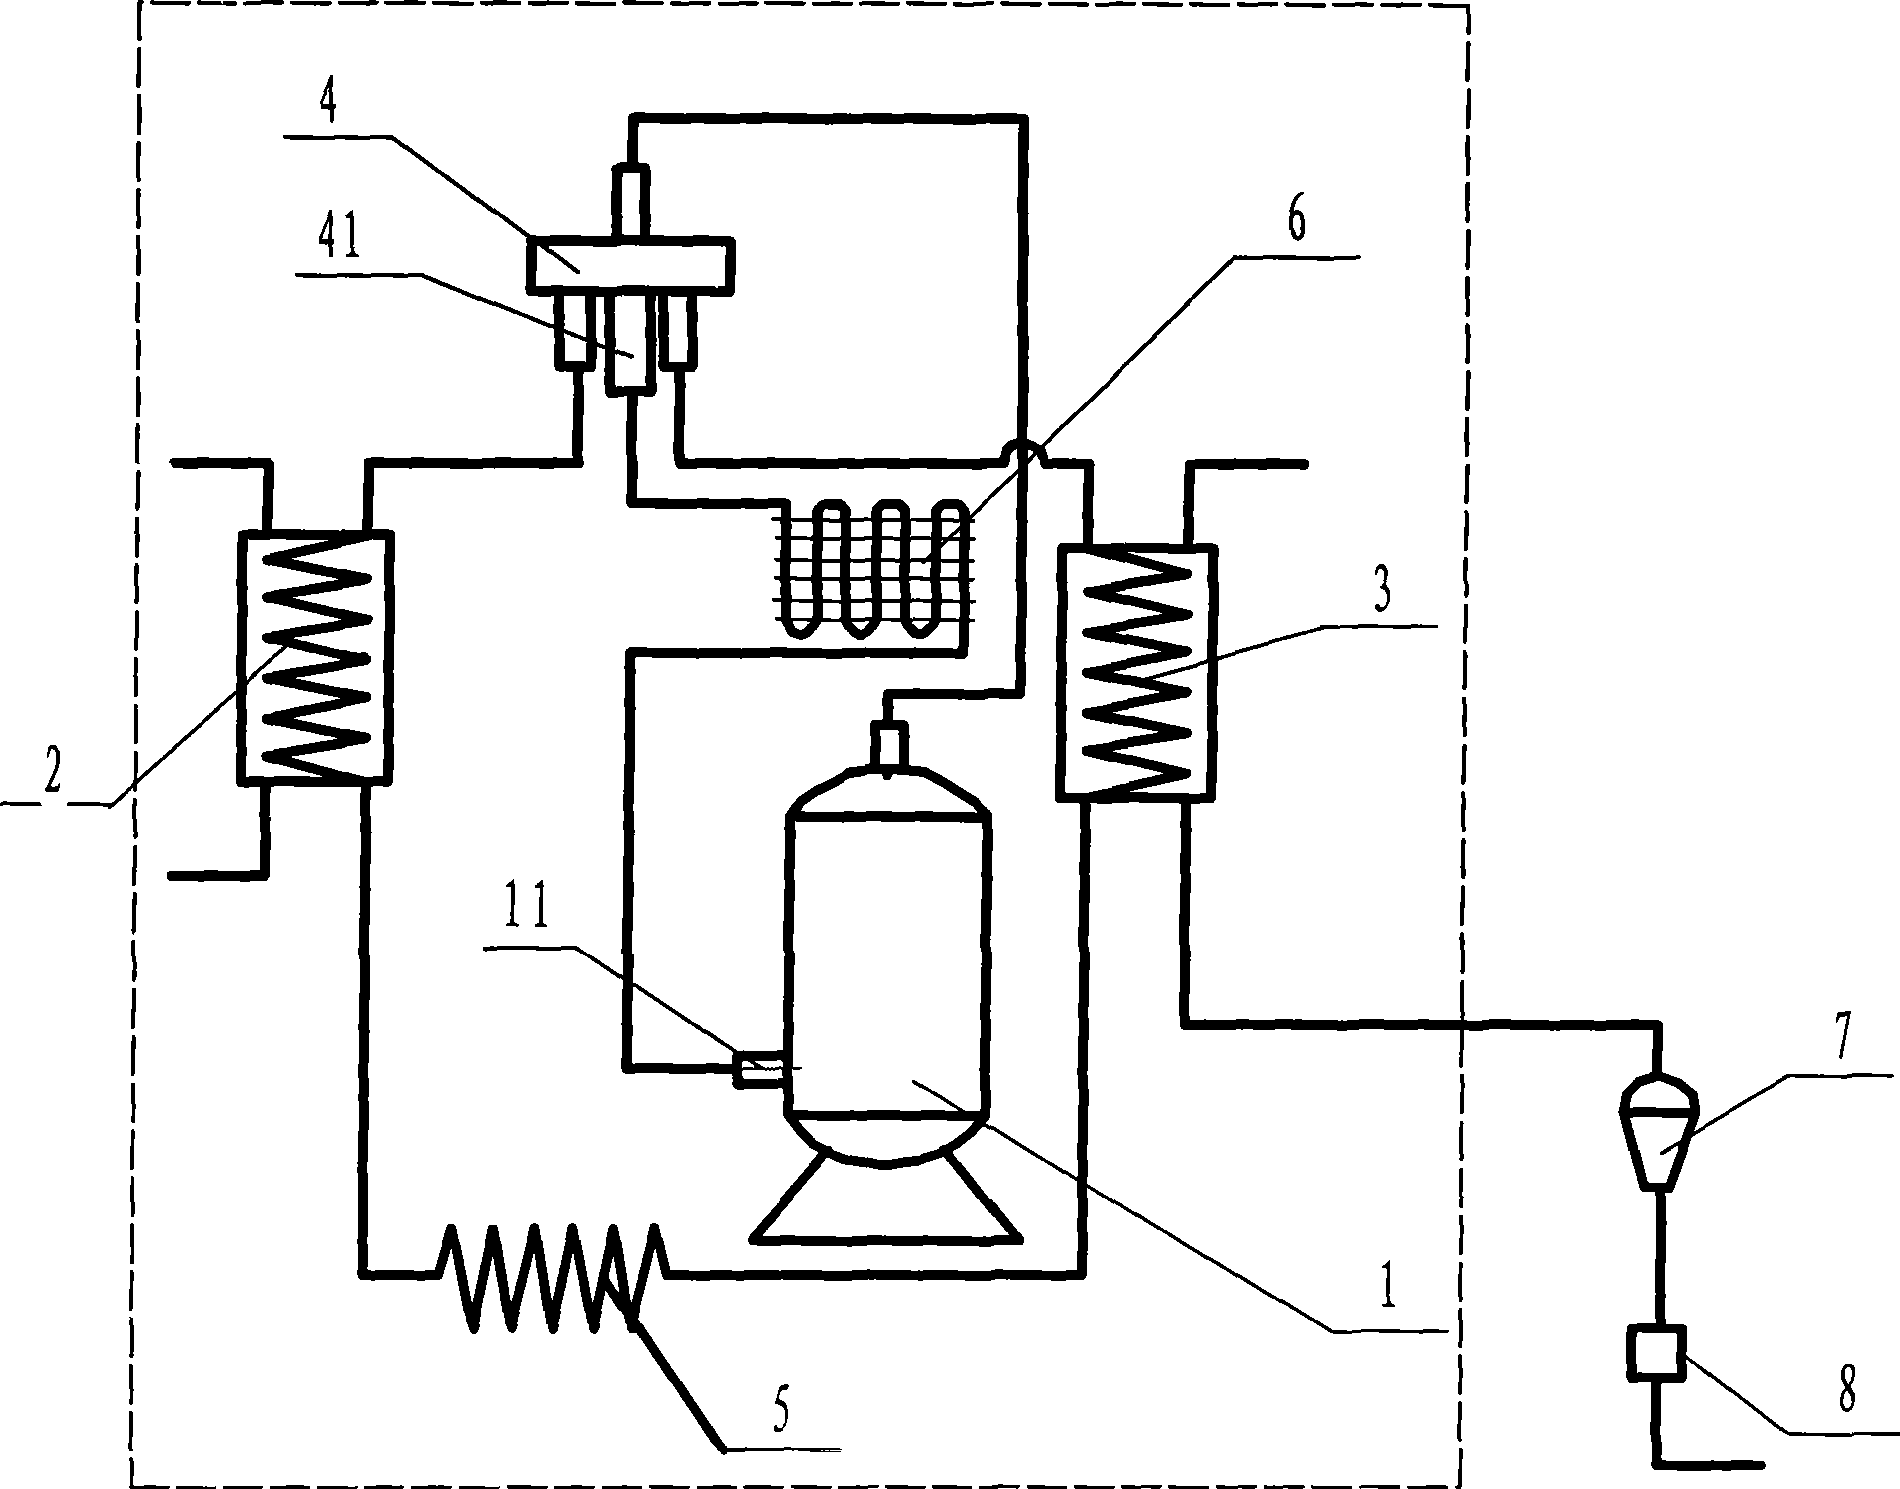 Sewage water source heat pump system